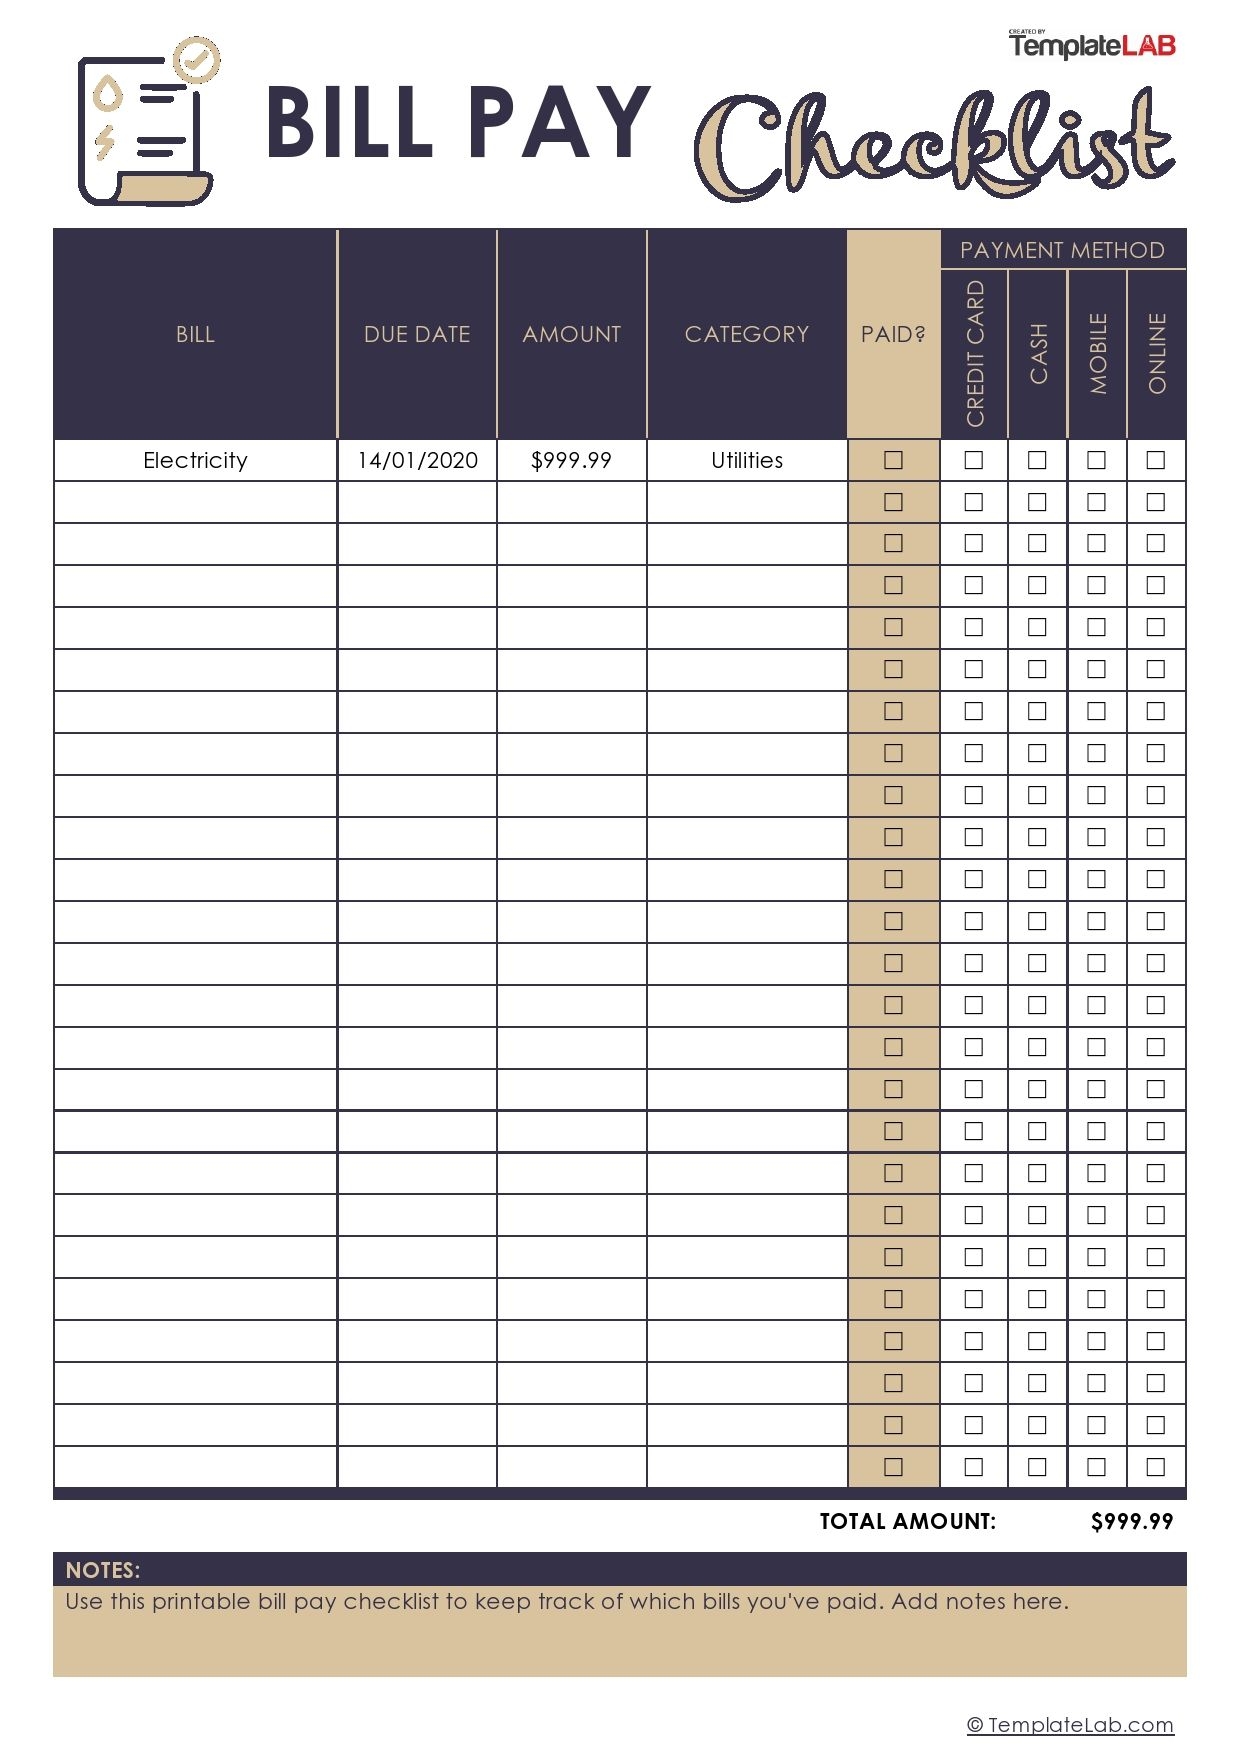 33 Free Bill Pay Checklists & Bill Calendars (pdf, Word & Excel)